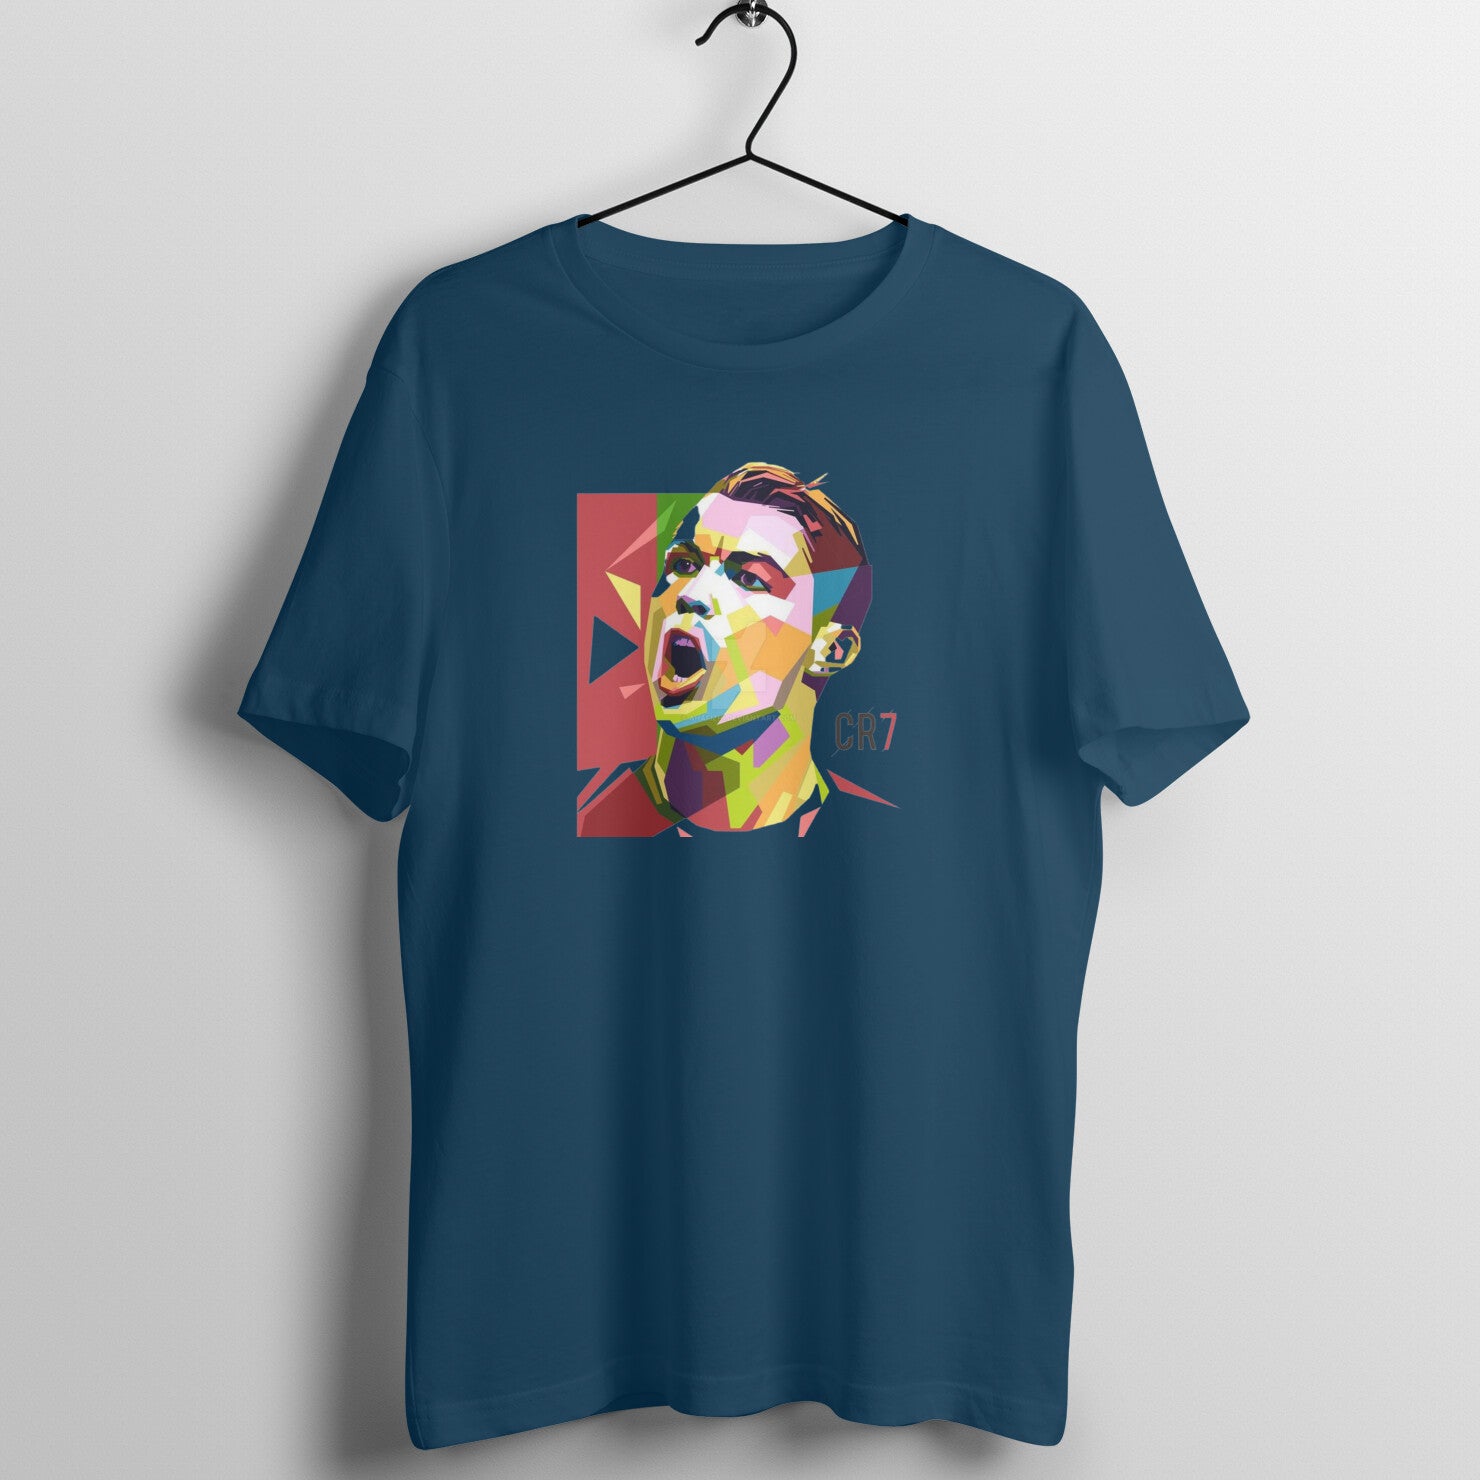 Cristiano Ronaldo shirt